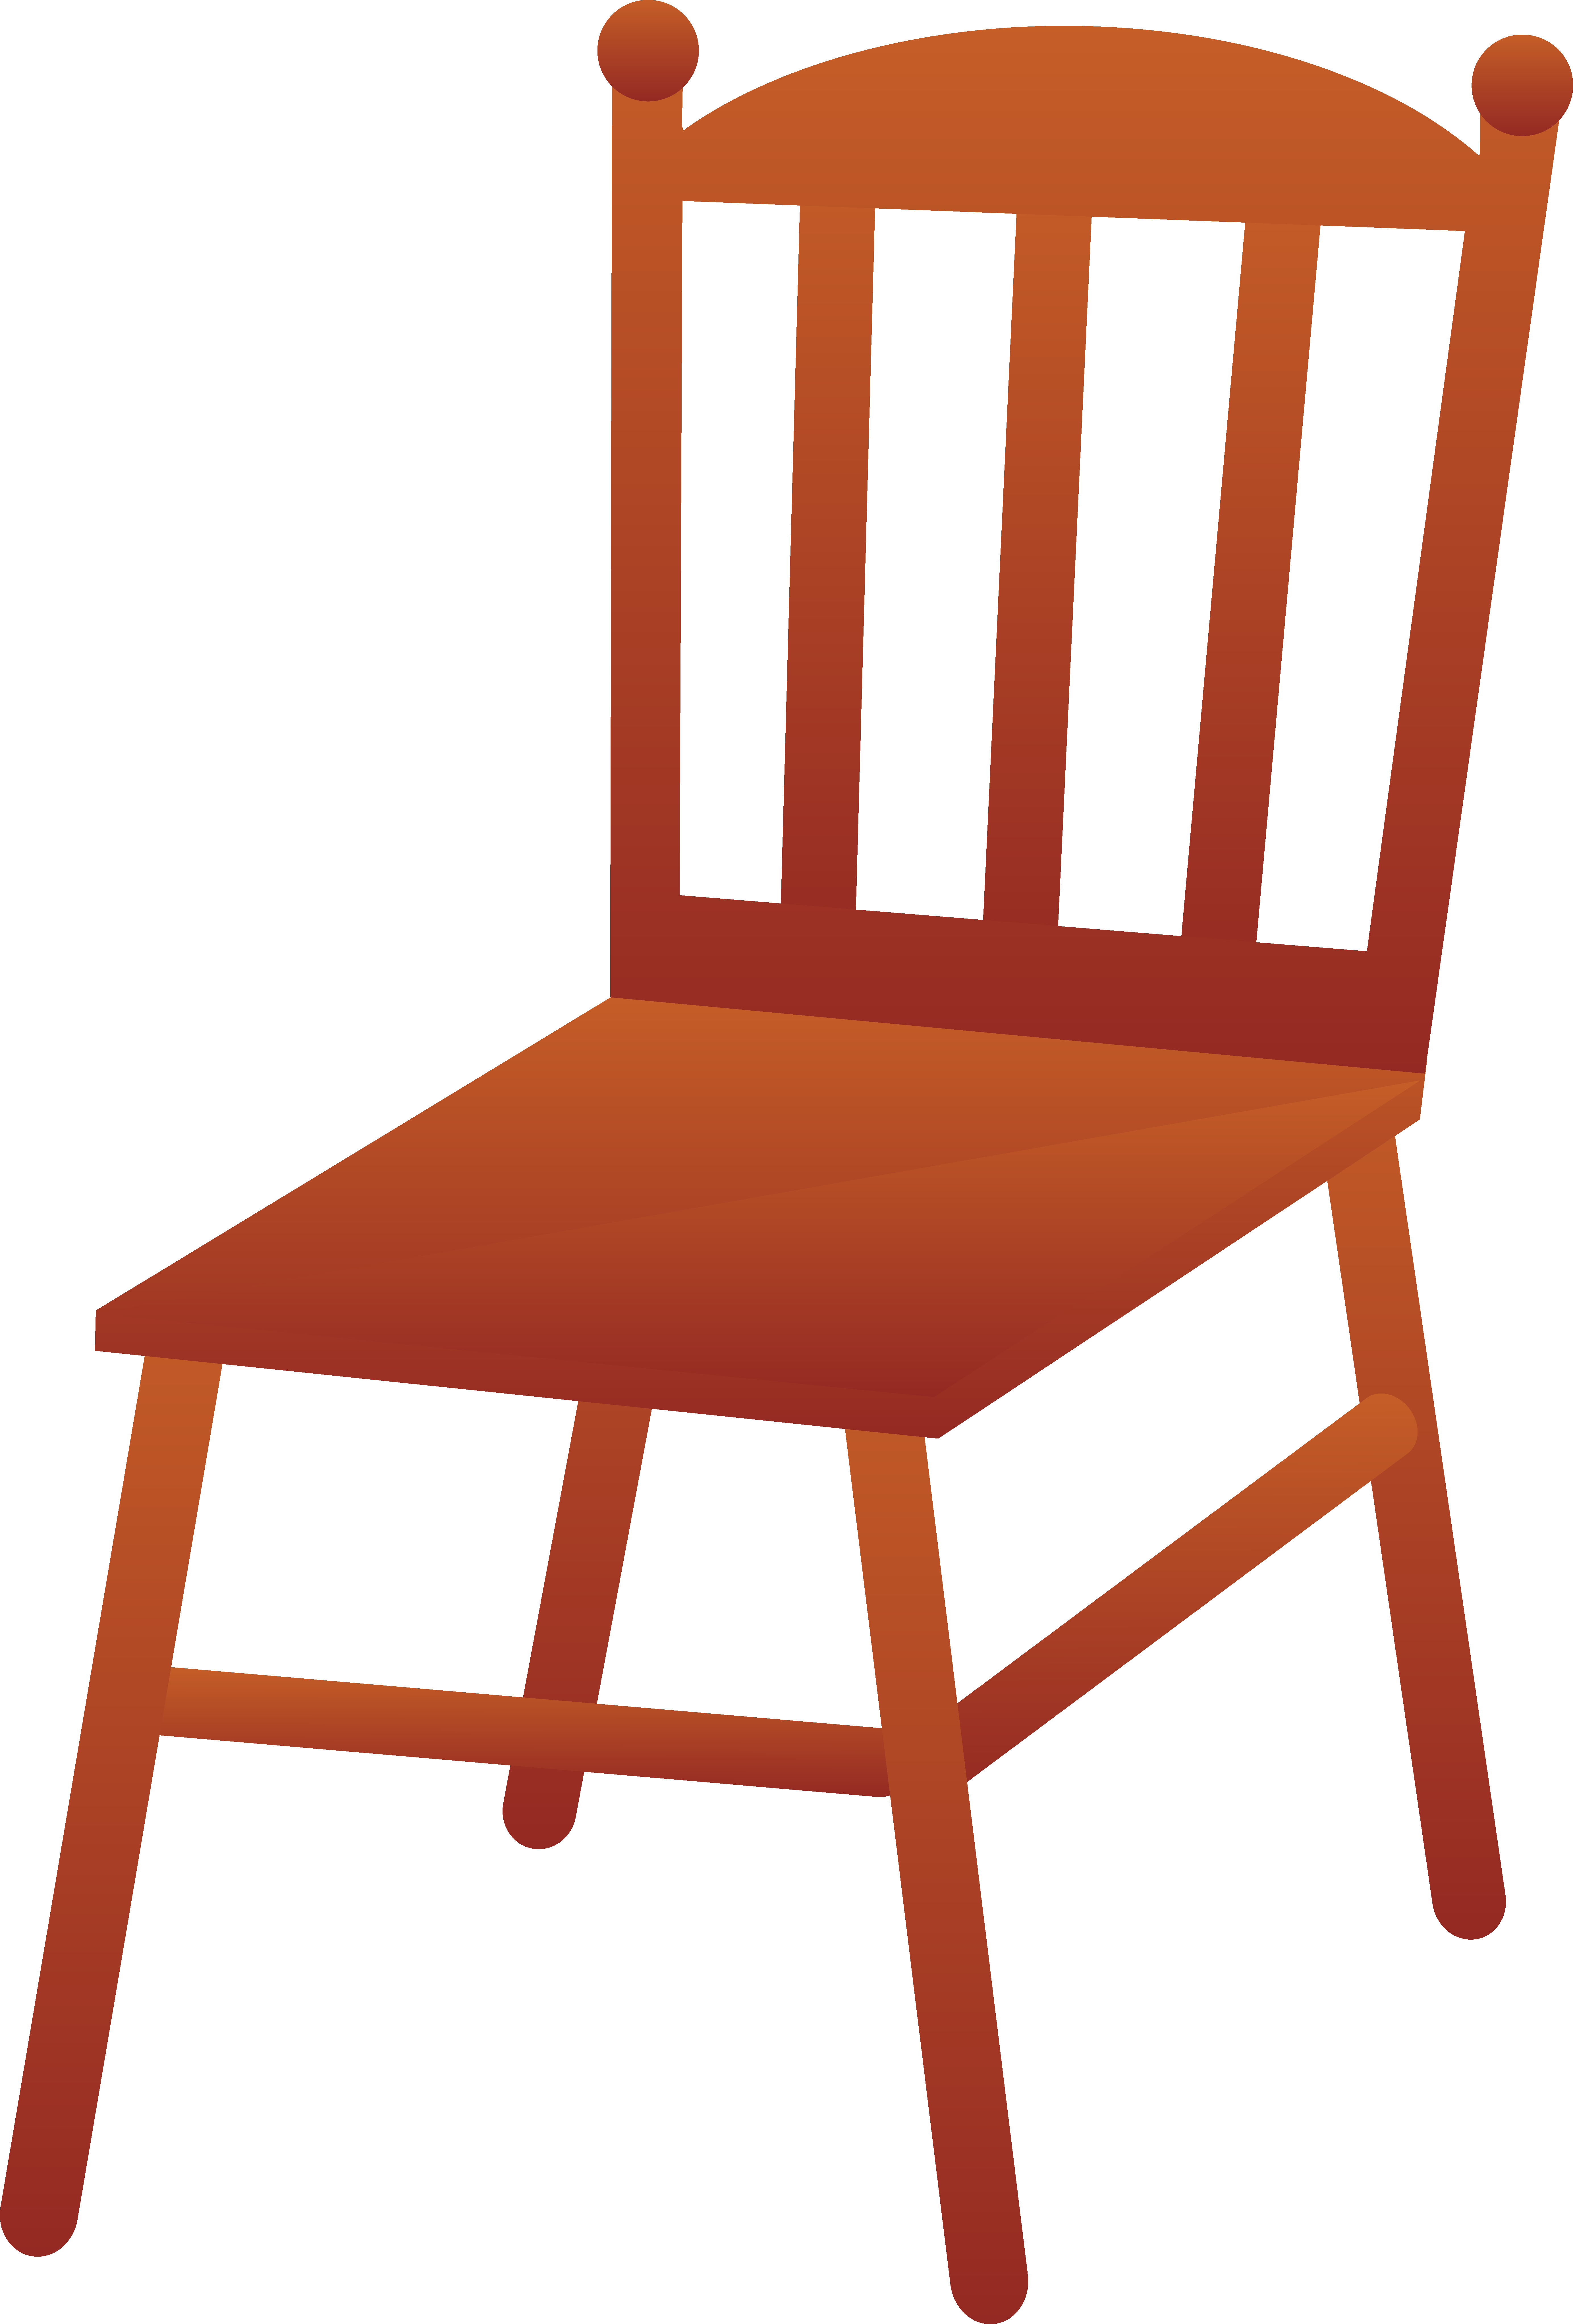 Wooden chair clipart.